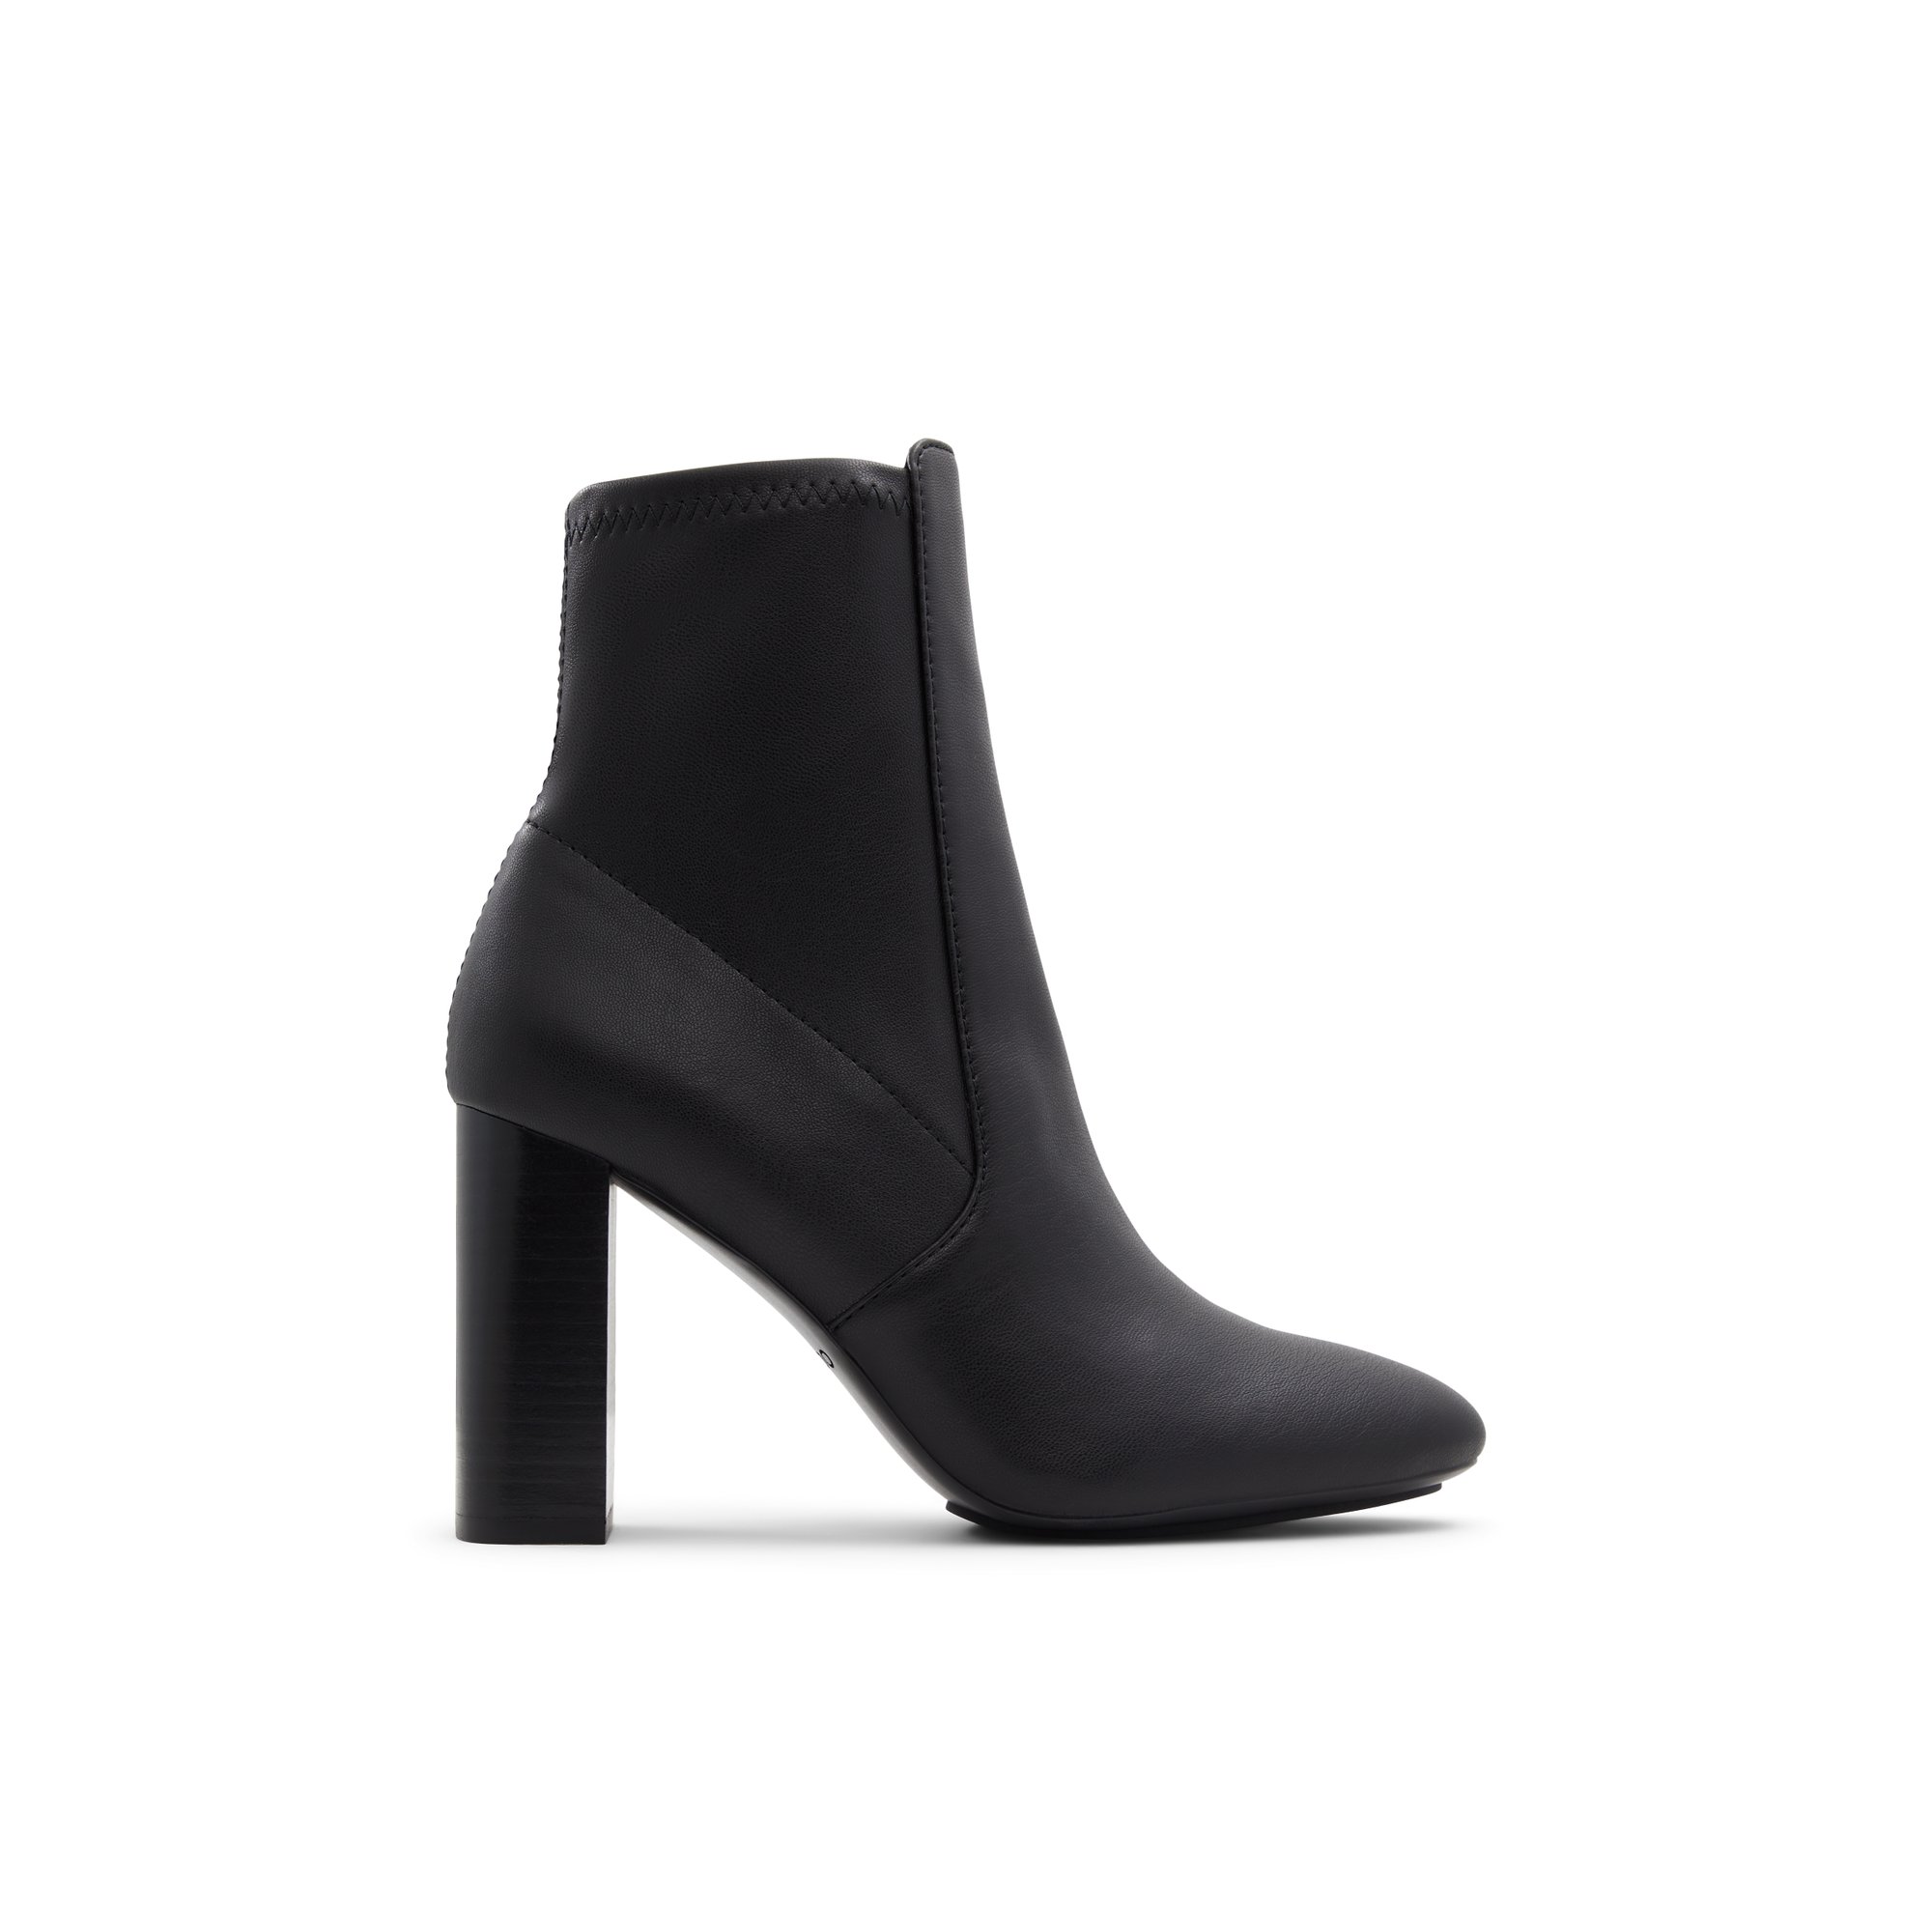 ALDO Laurella - Women's Boots Dress - Black